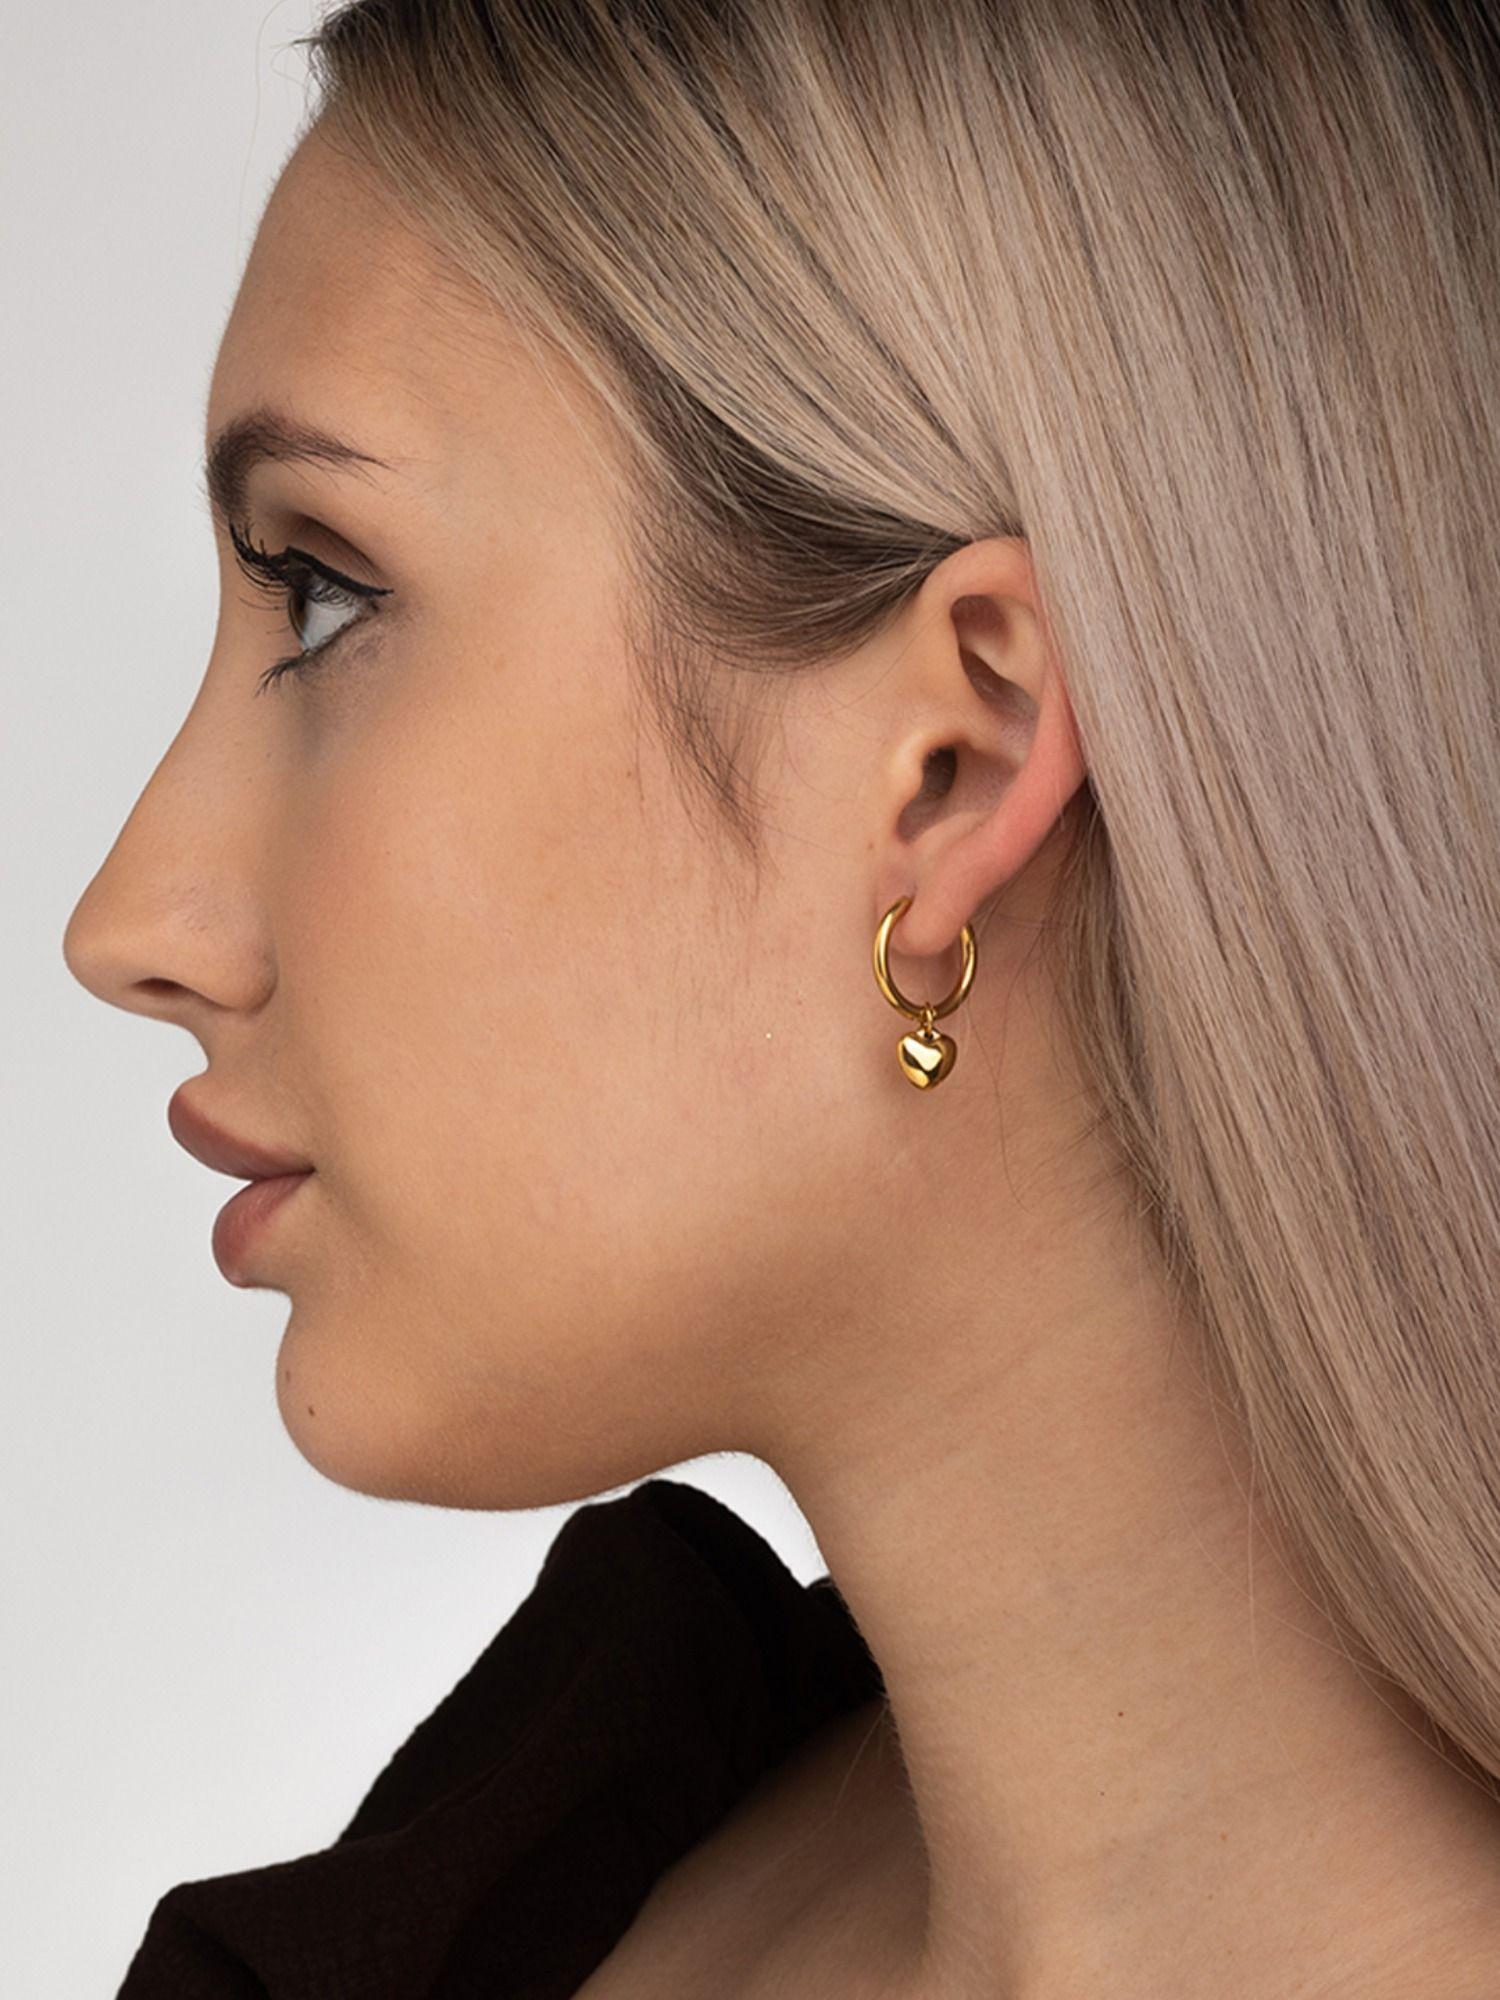 18k gold plated small heart hoop earrings for women